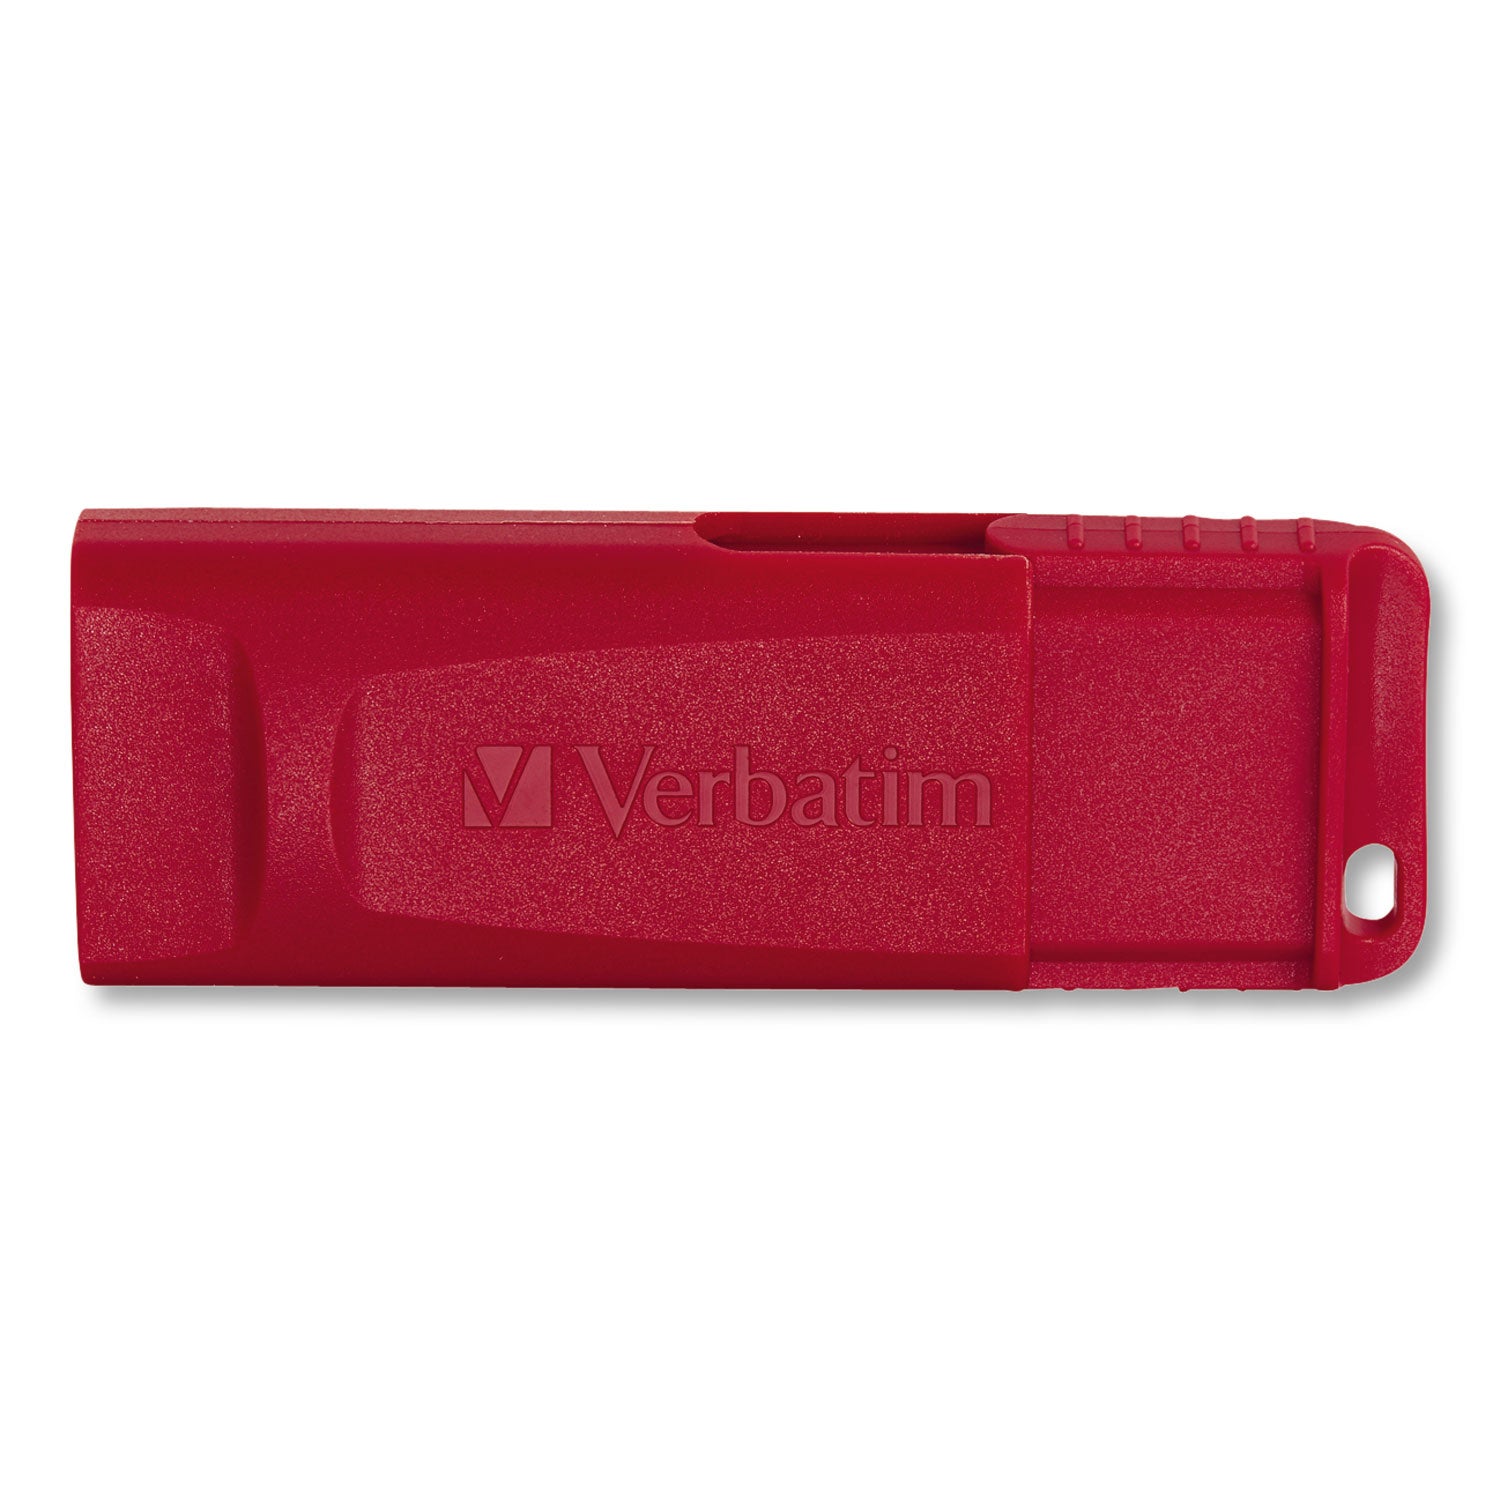 Store 'n' Go USB Flash Drive, 32 GB, Red - 